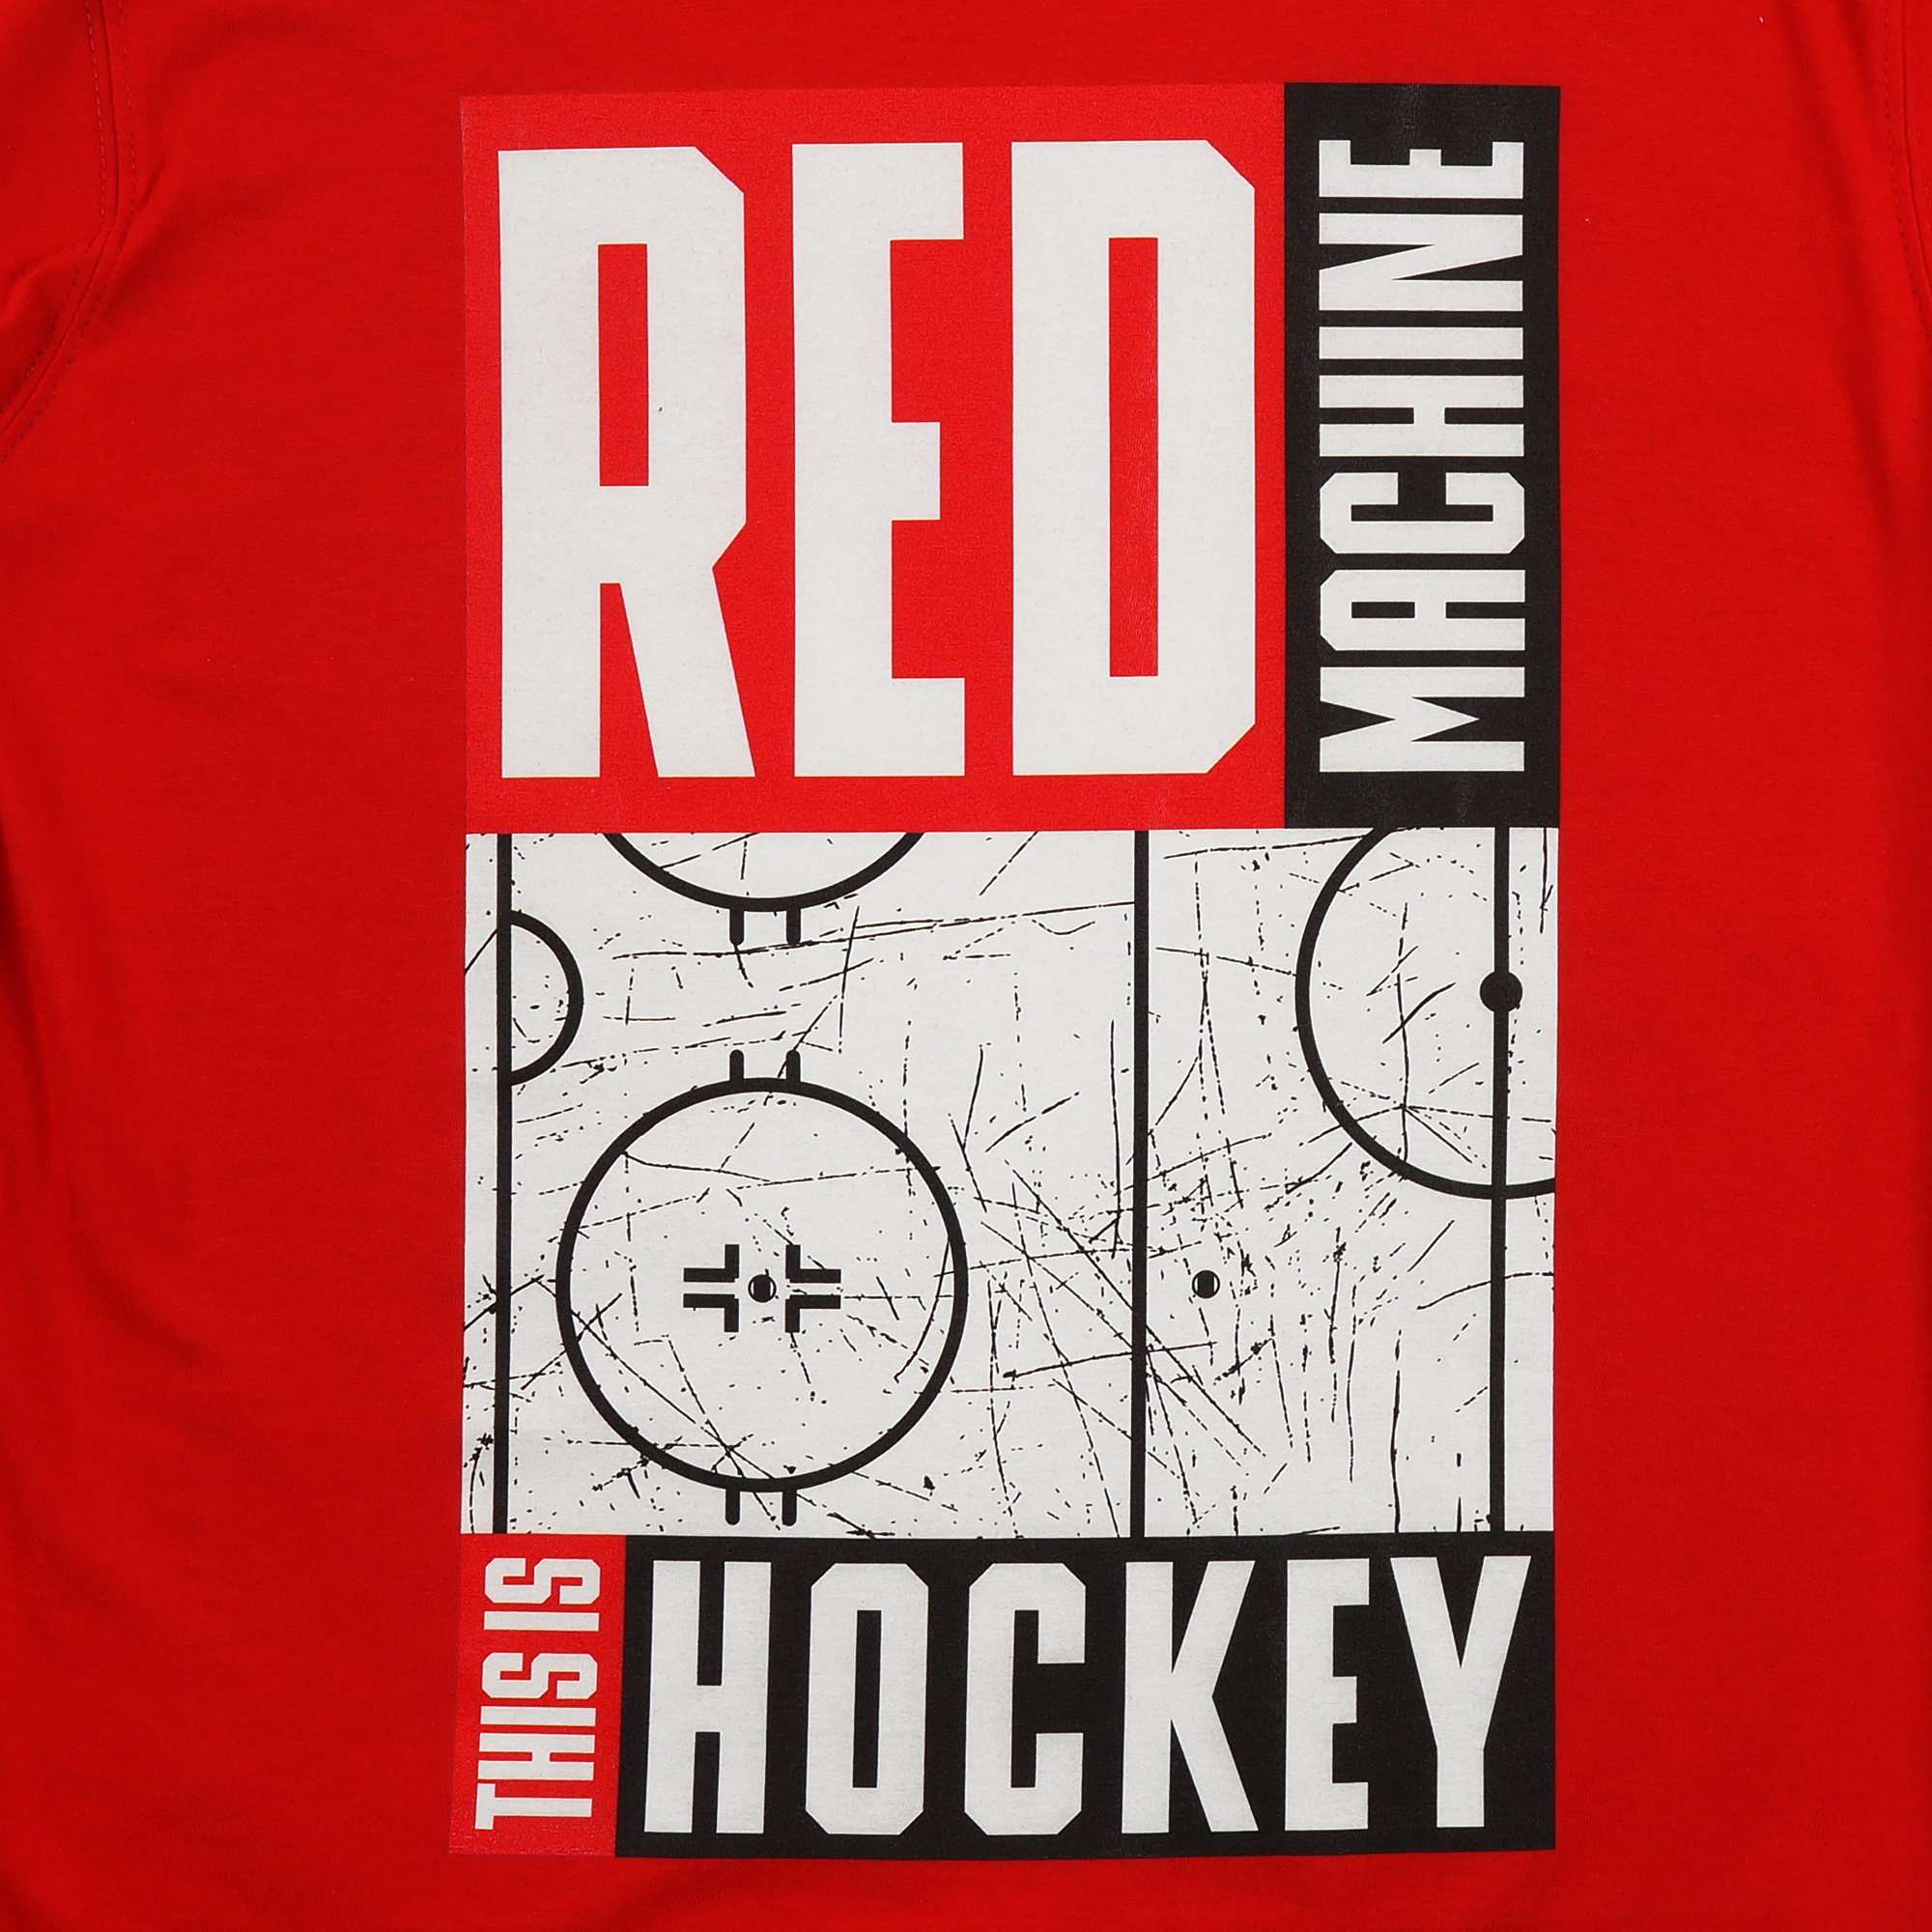 Футболка Red MachIne this is hockey площадка 1 красный